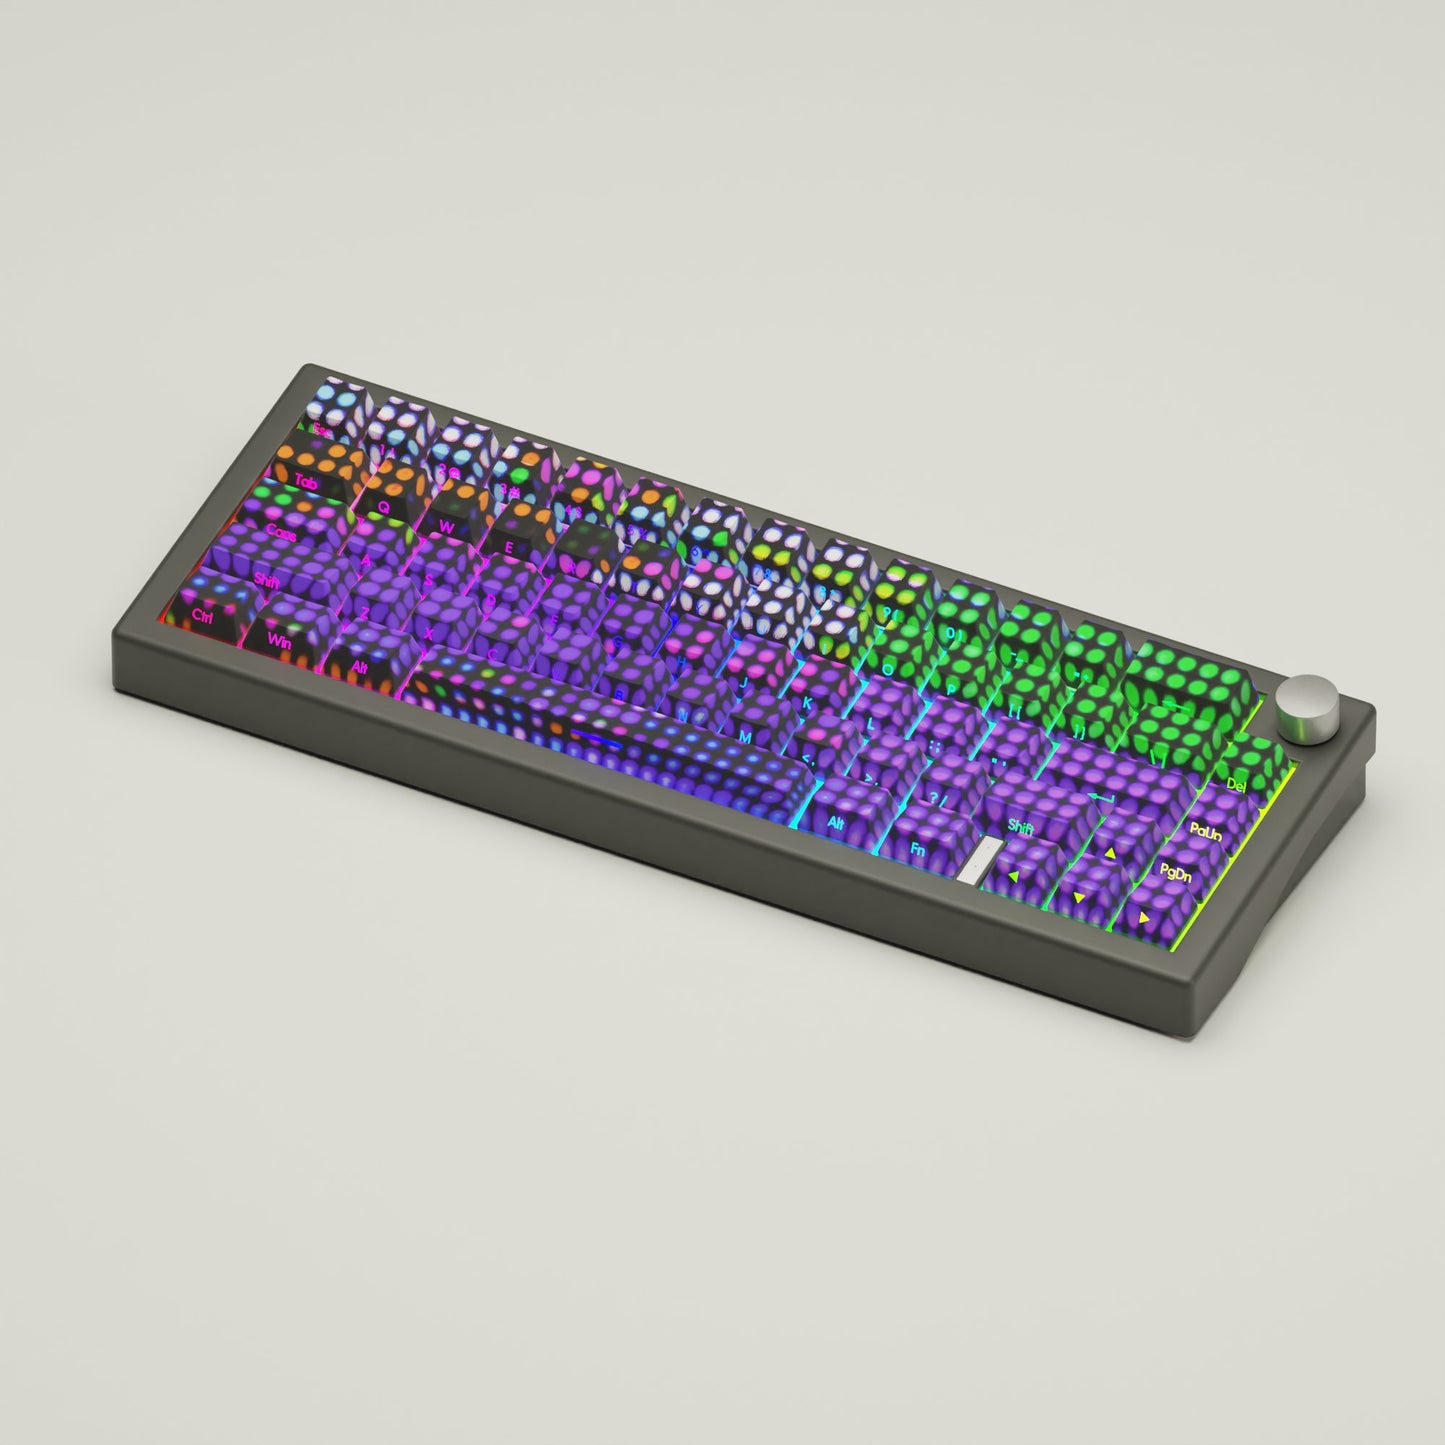 Glitch Art Cyberpunk GMK67 Keyboard(65% Mechanical Keyboard with knob) - Goblintechkeys